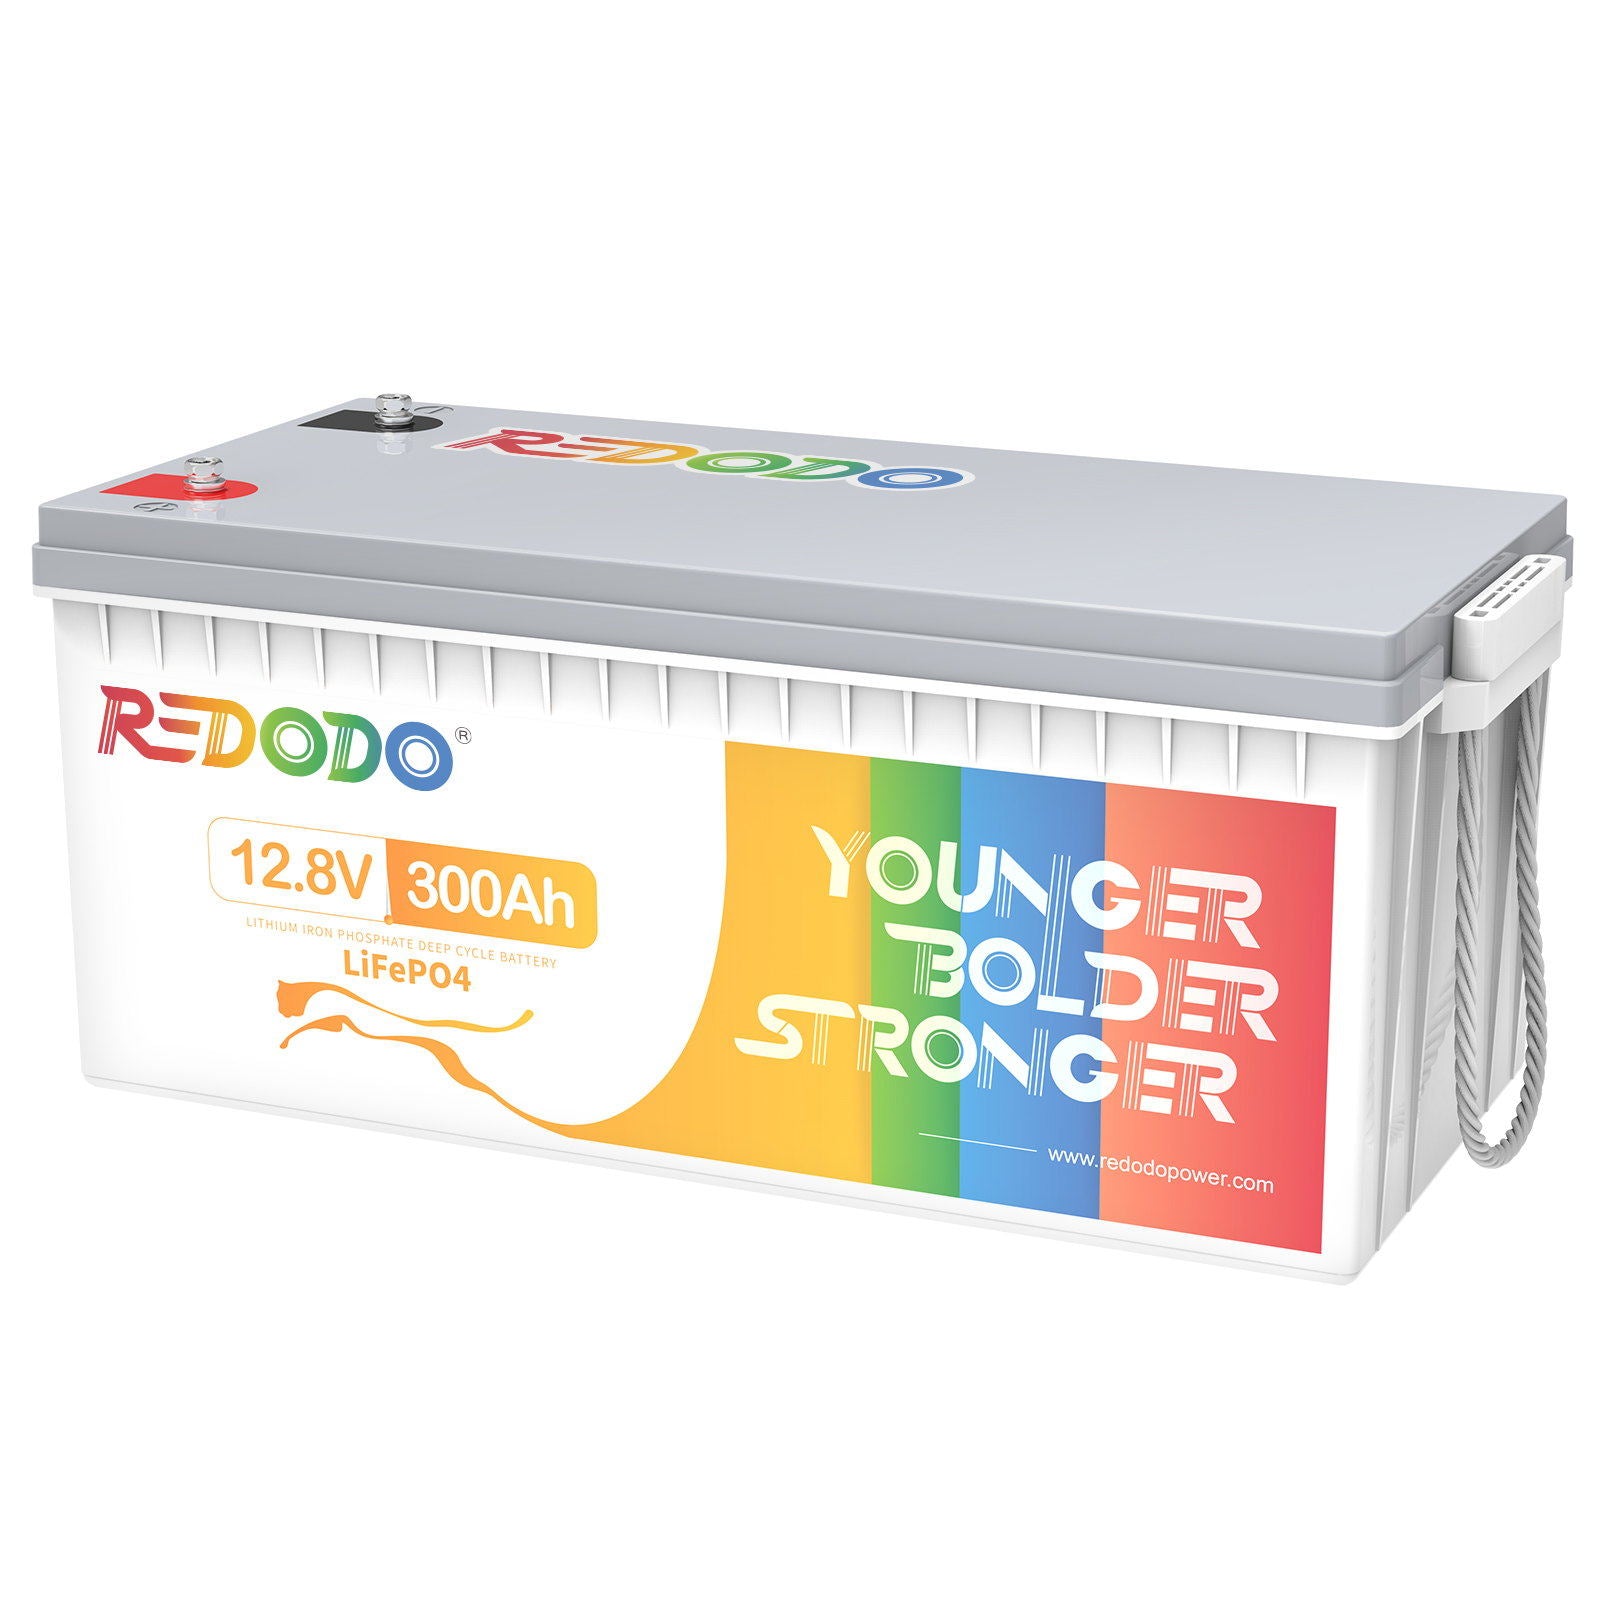 Redodo 12V 300ah lithium battery, larger capacity, free shipping